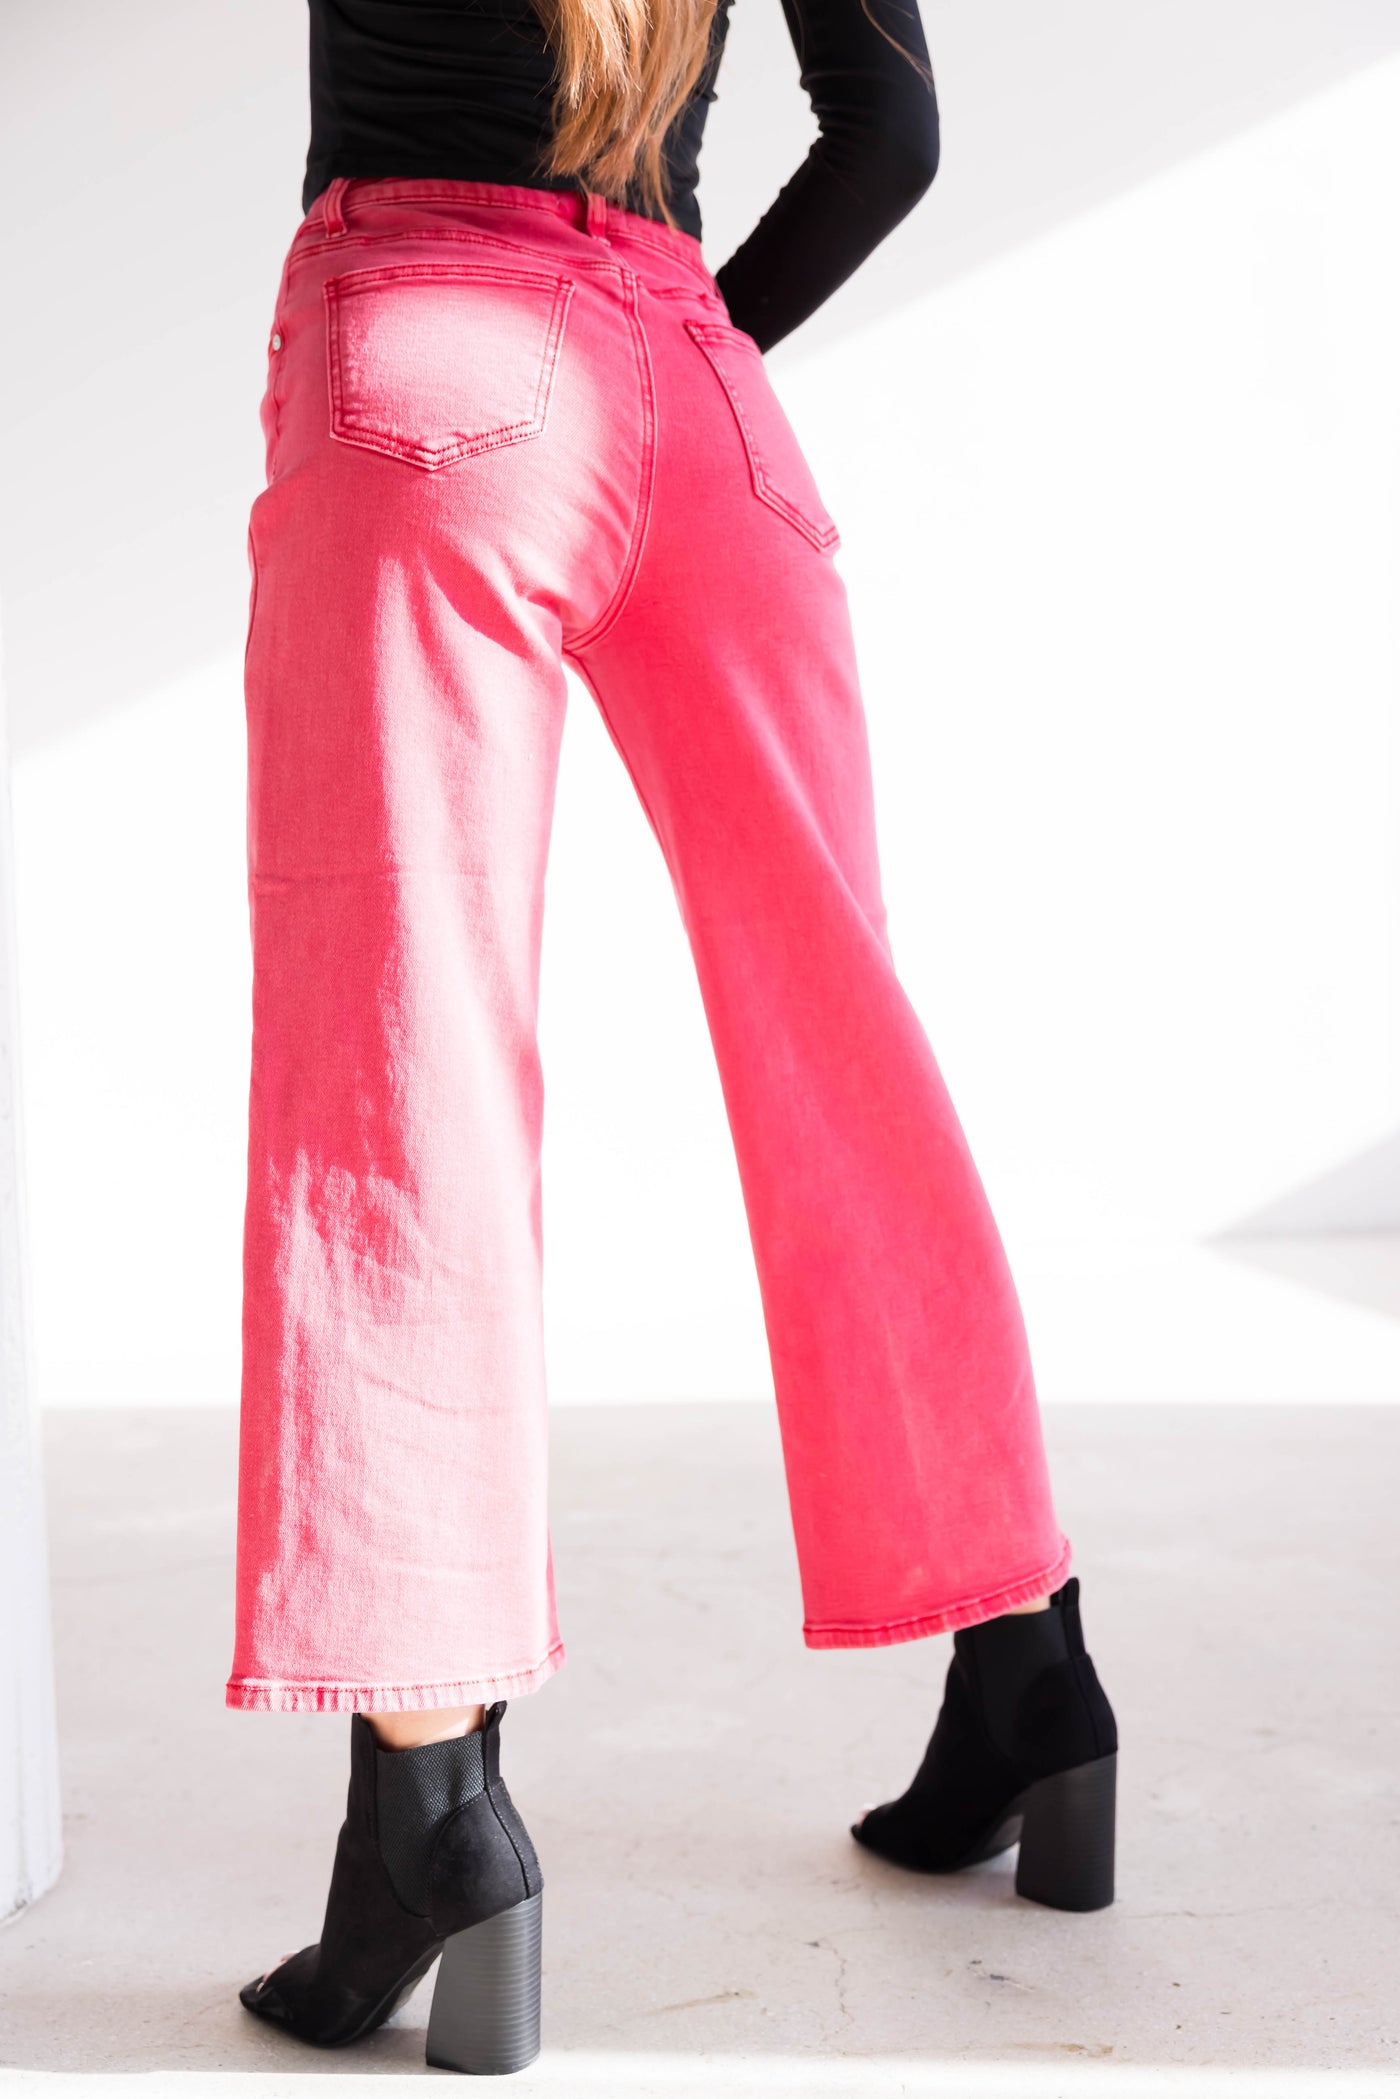 Denim Zone Hot Pink Super Stretchy Wide Leg Jeans